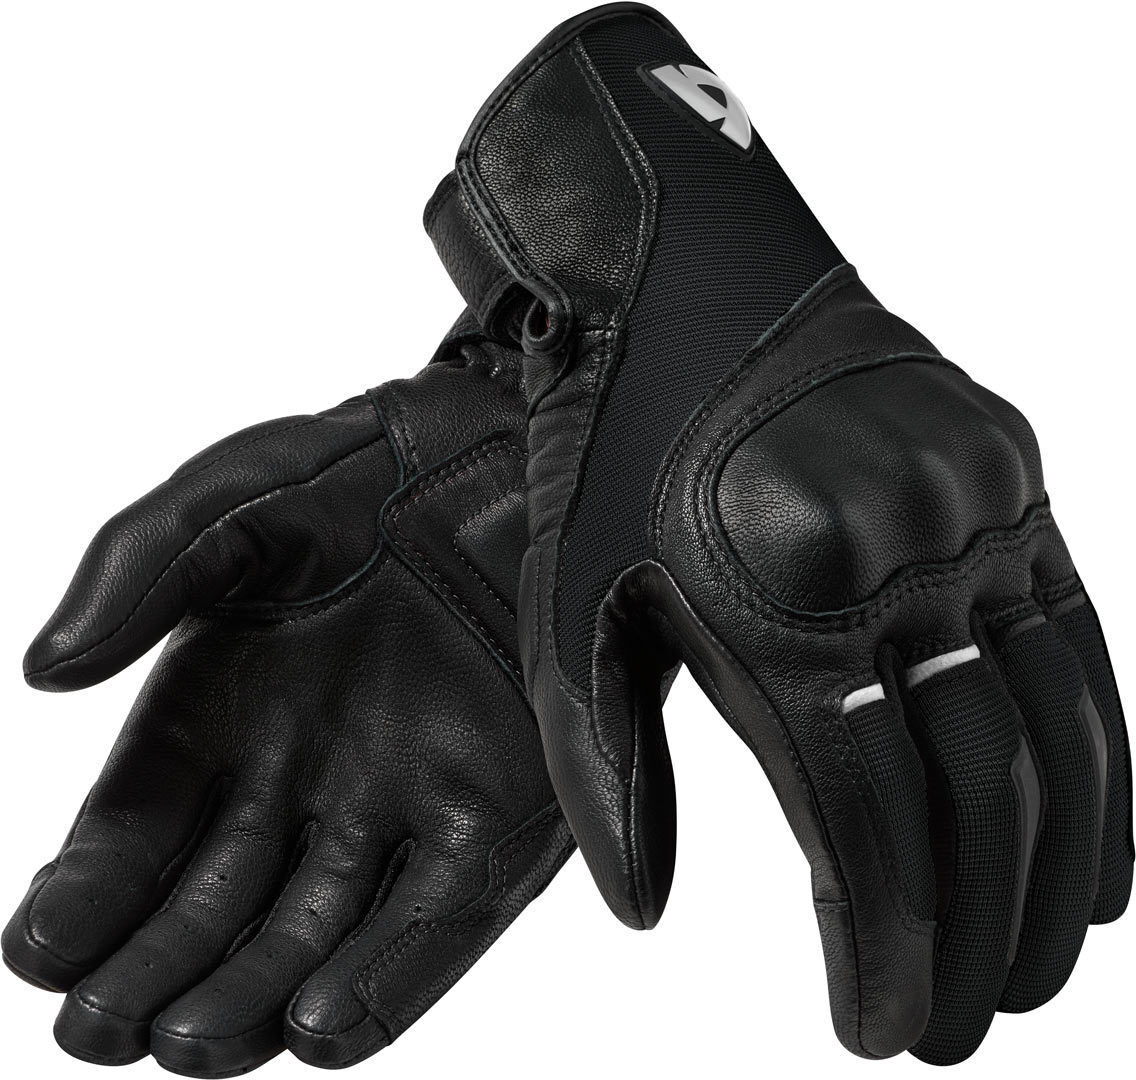 Revit Titan Motorcycle Gloves  - Black